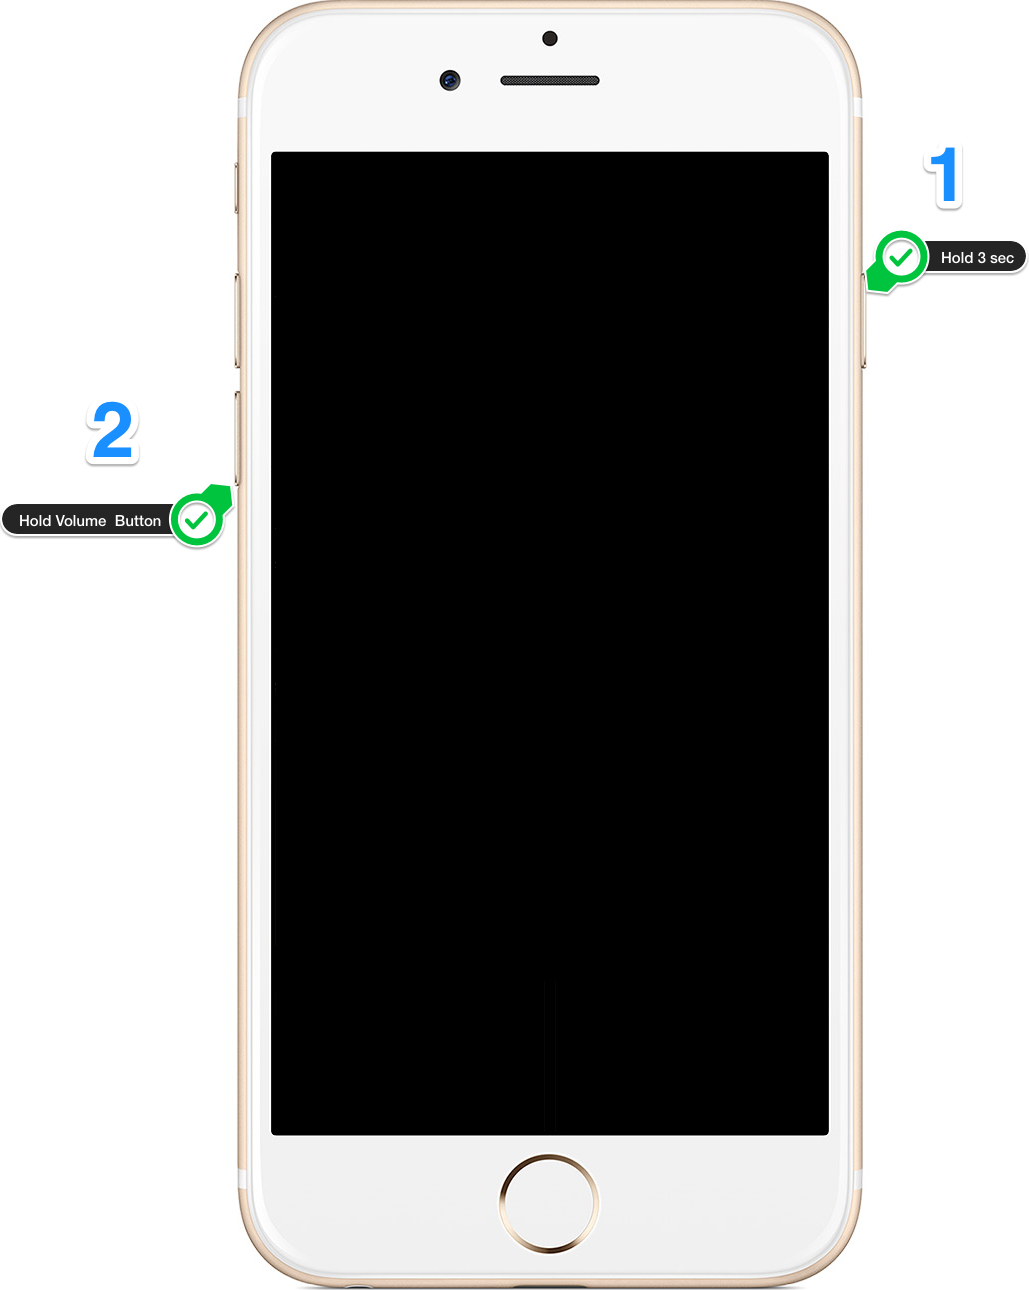 Fix iOS 14 Installation Problem Tip 3